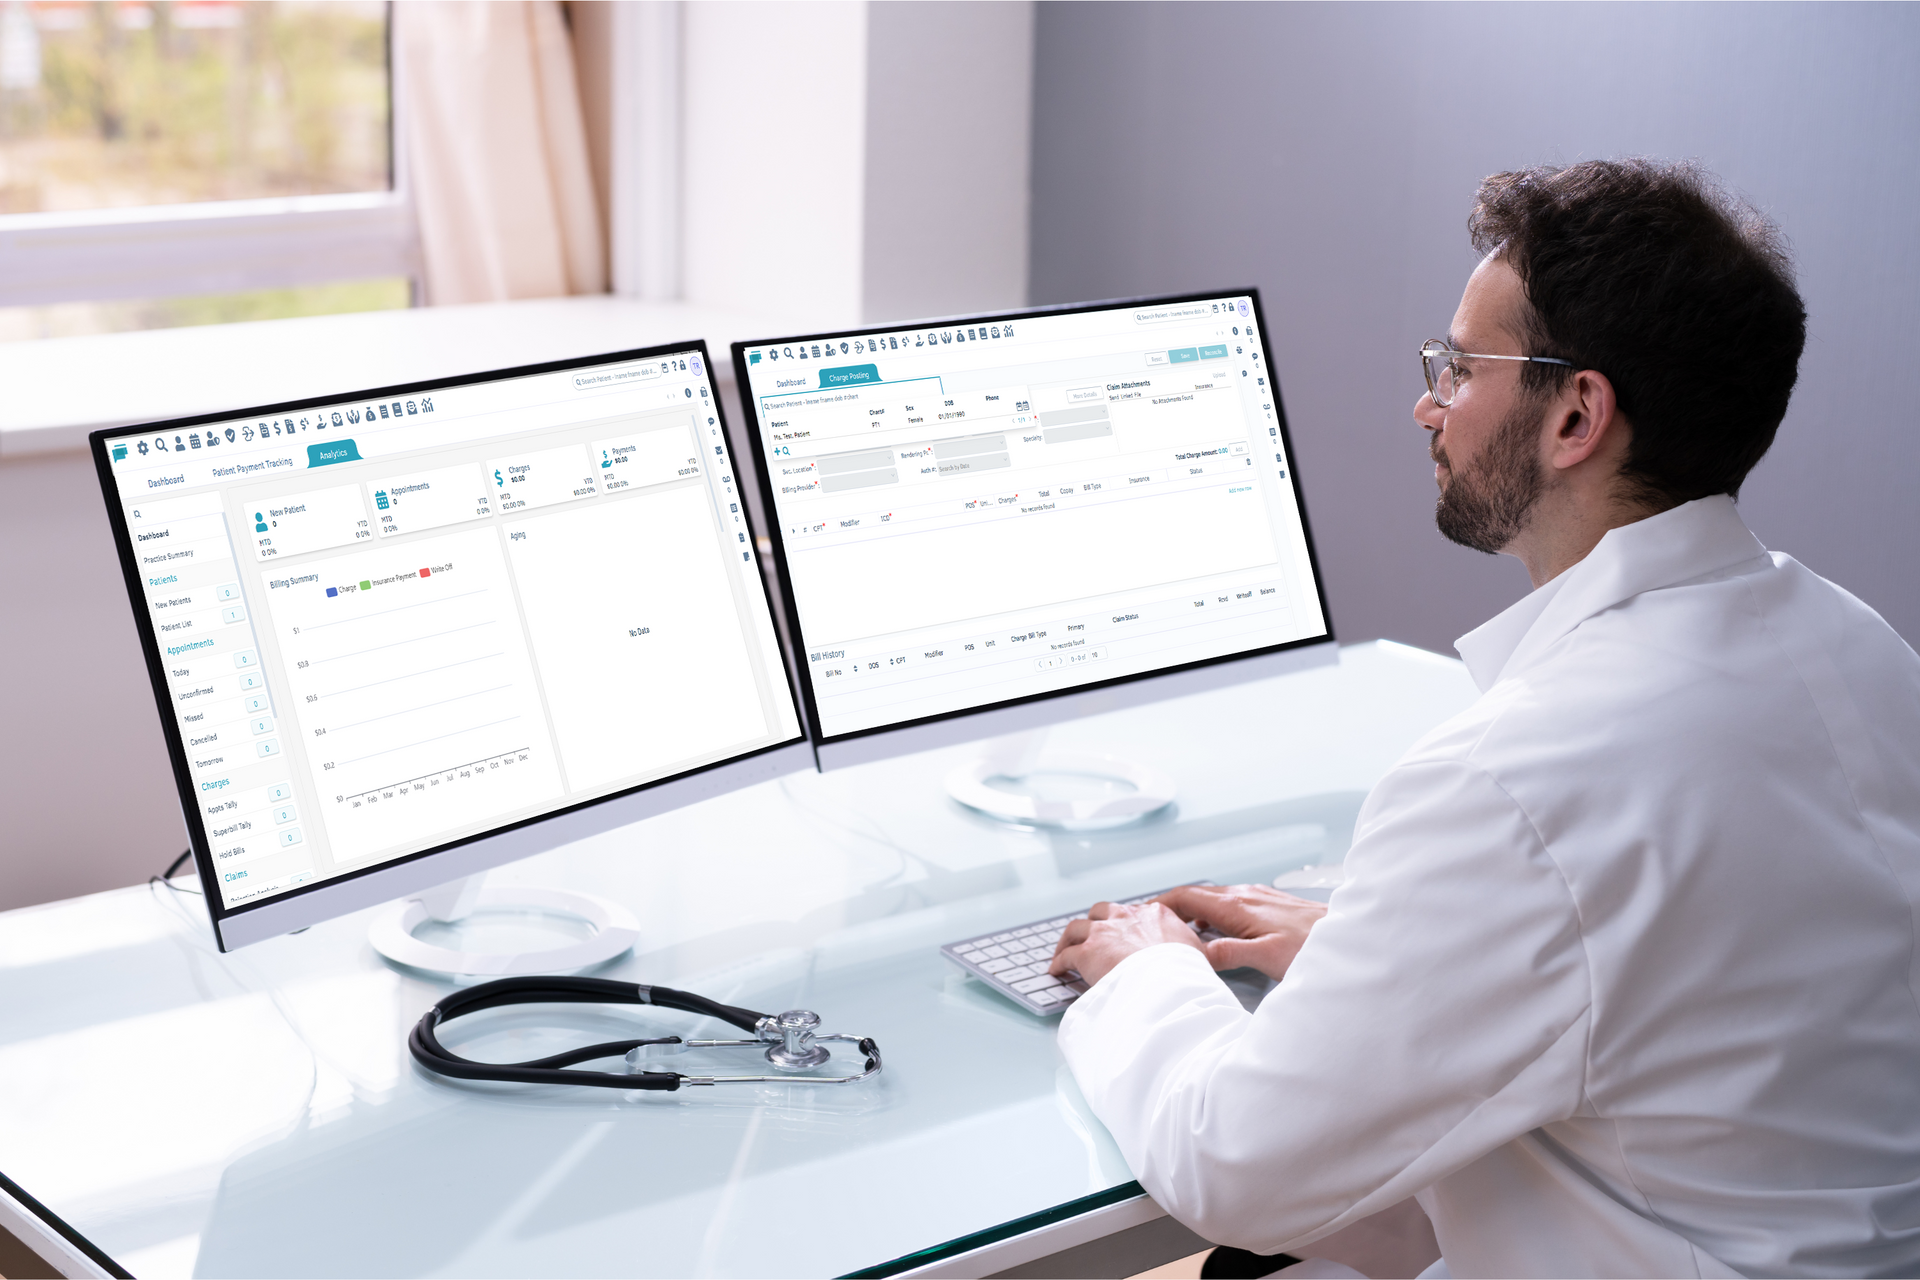 Healthcare worker navigating a medical billing software interface